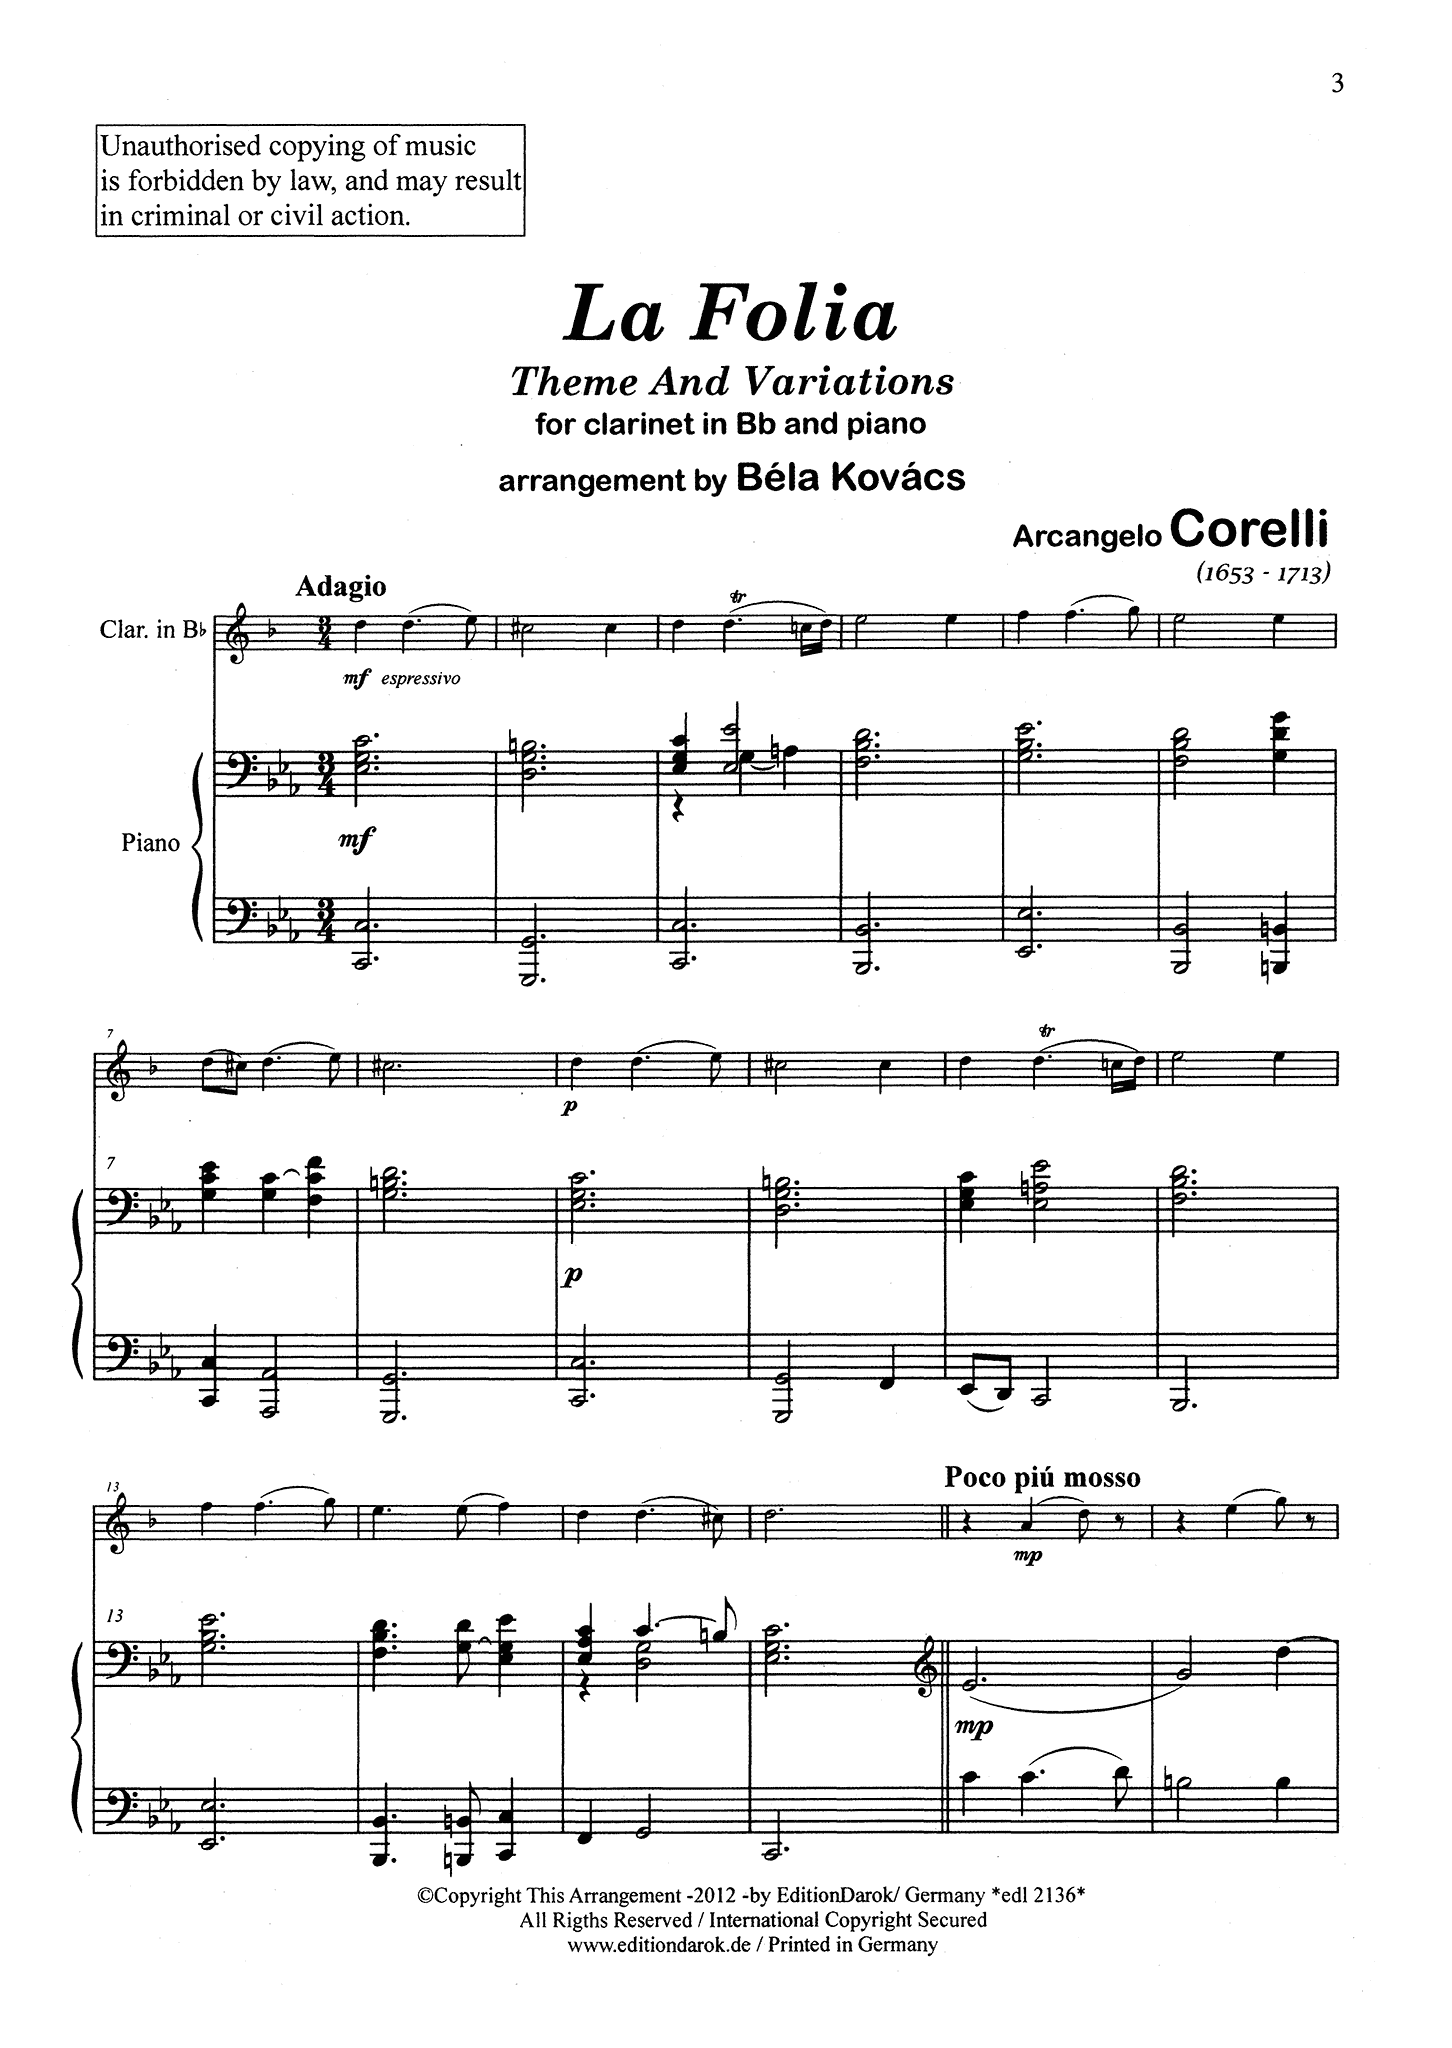 Corelli / Kovacs: La Folia clarinet and piano adaptation score